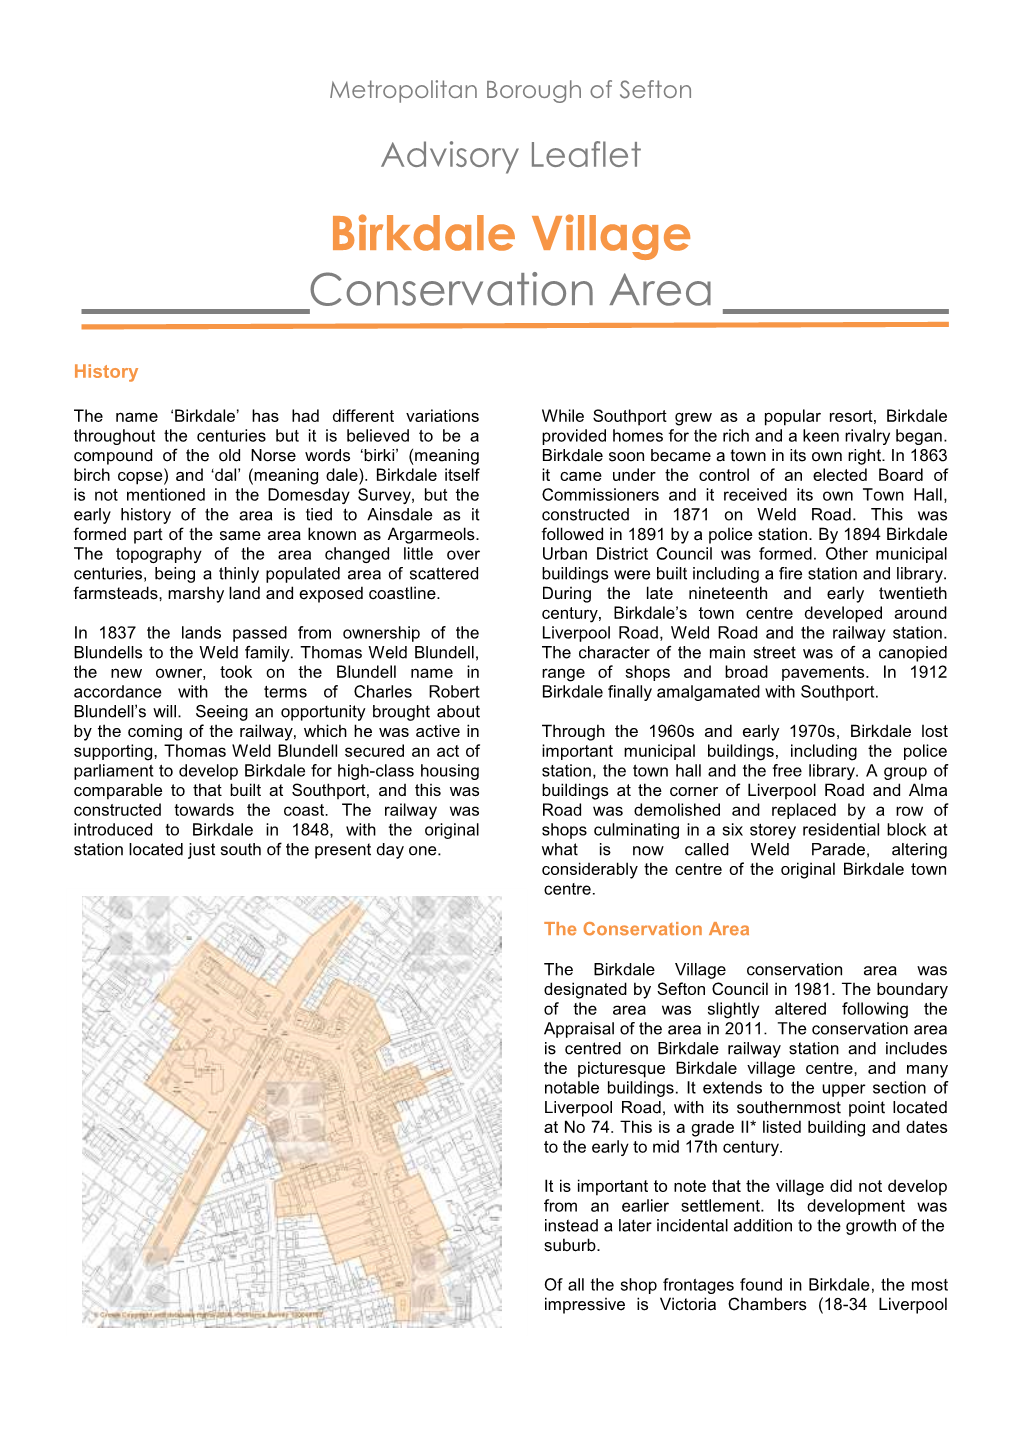 Birkdale Village Conservation Area Advisory Leaflet